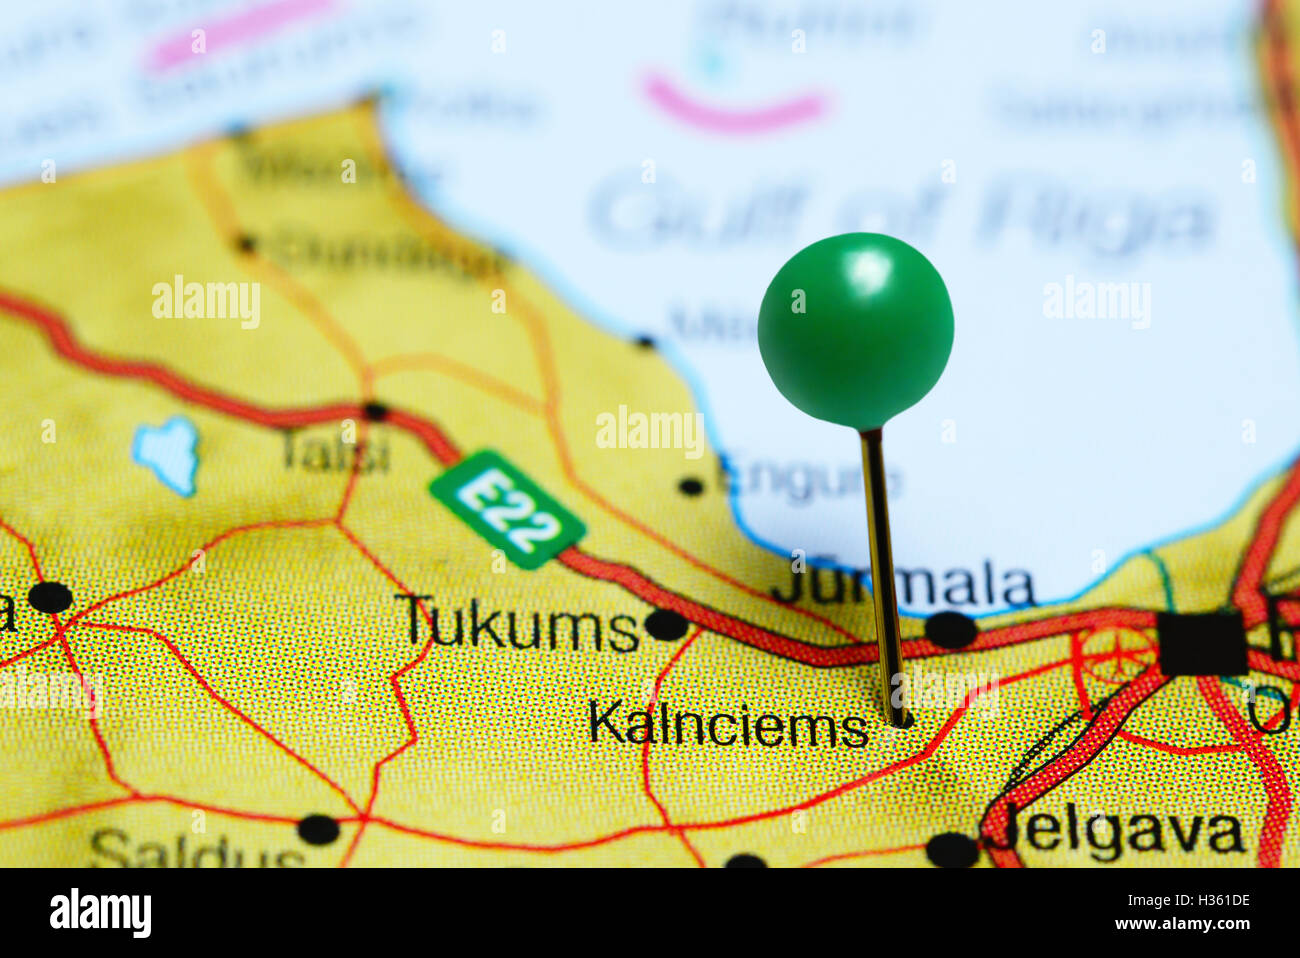 Kalnciems pinned on a map of Latvia Stock Photo